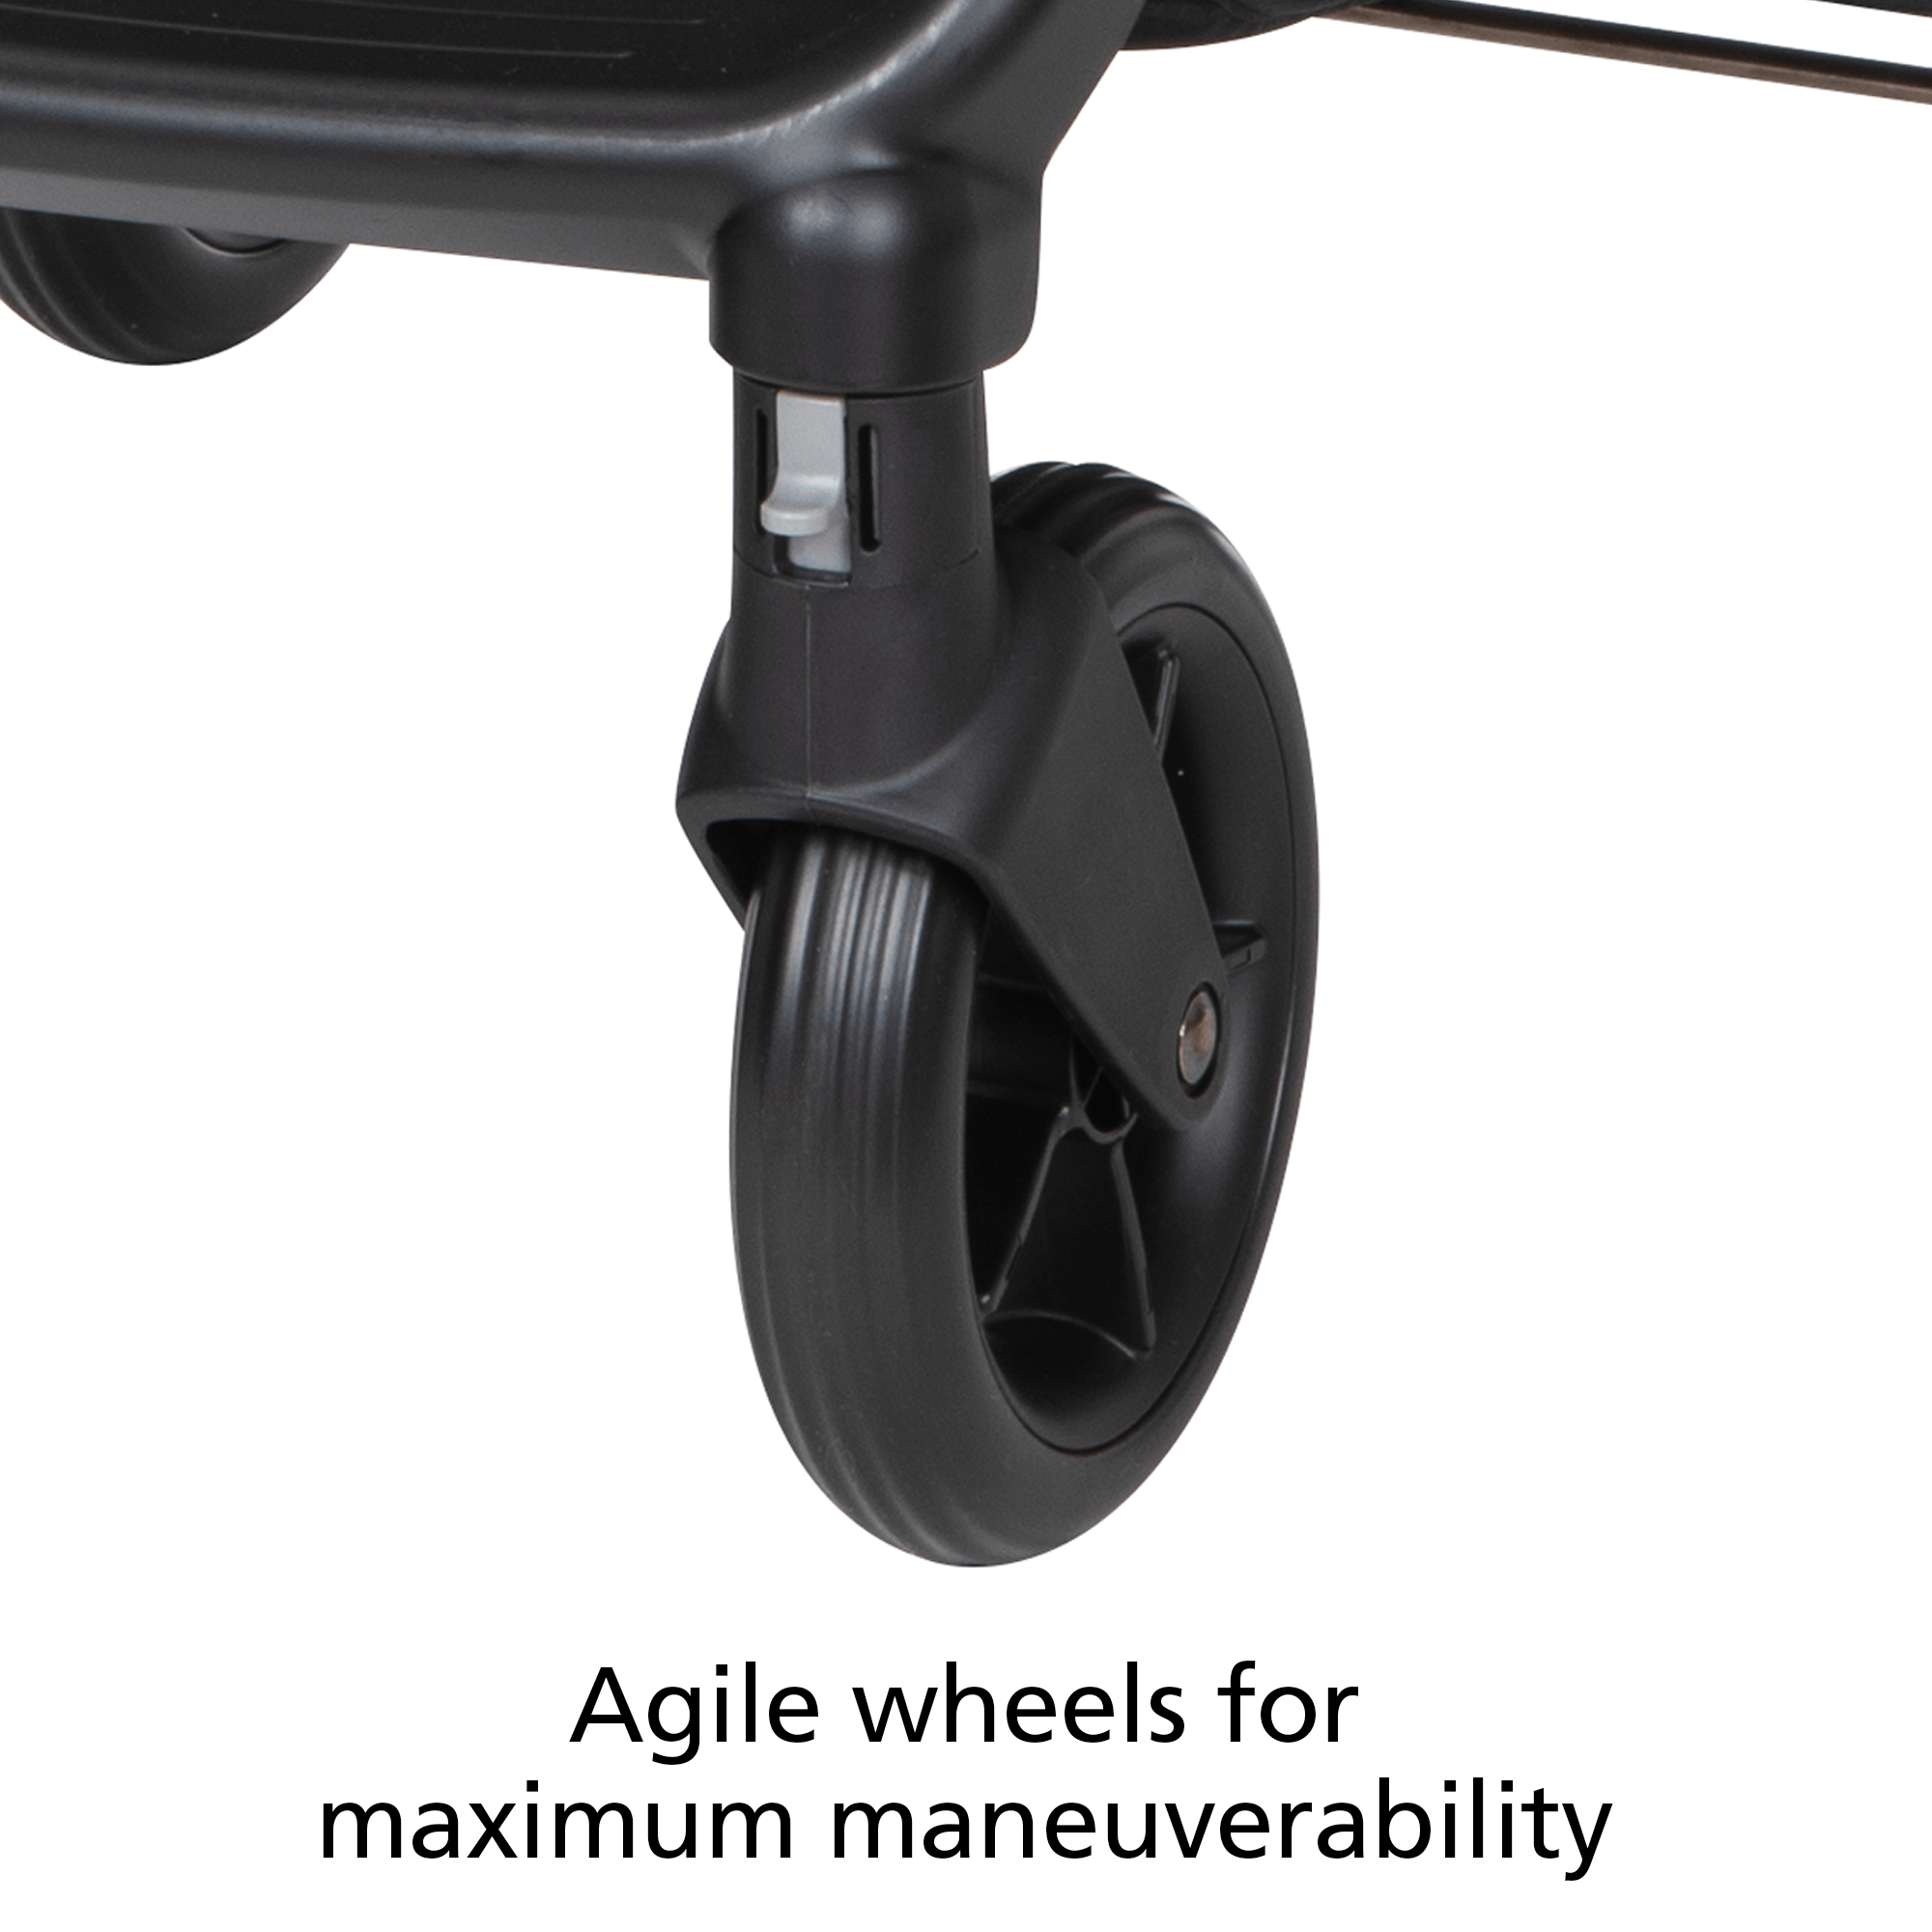 Agile wheels for maximum maneurability